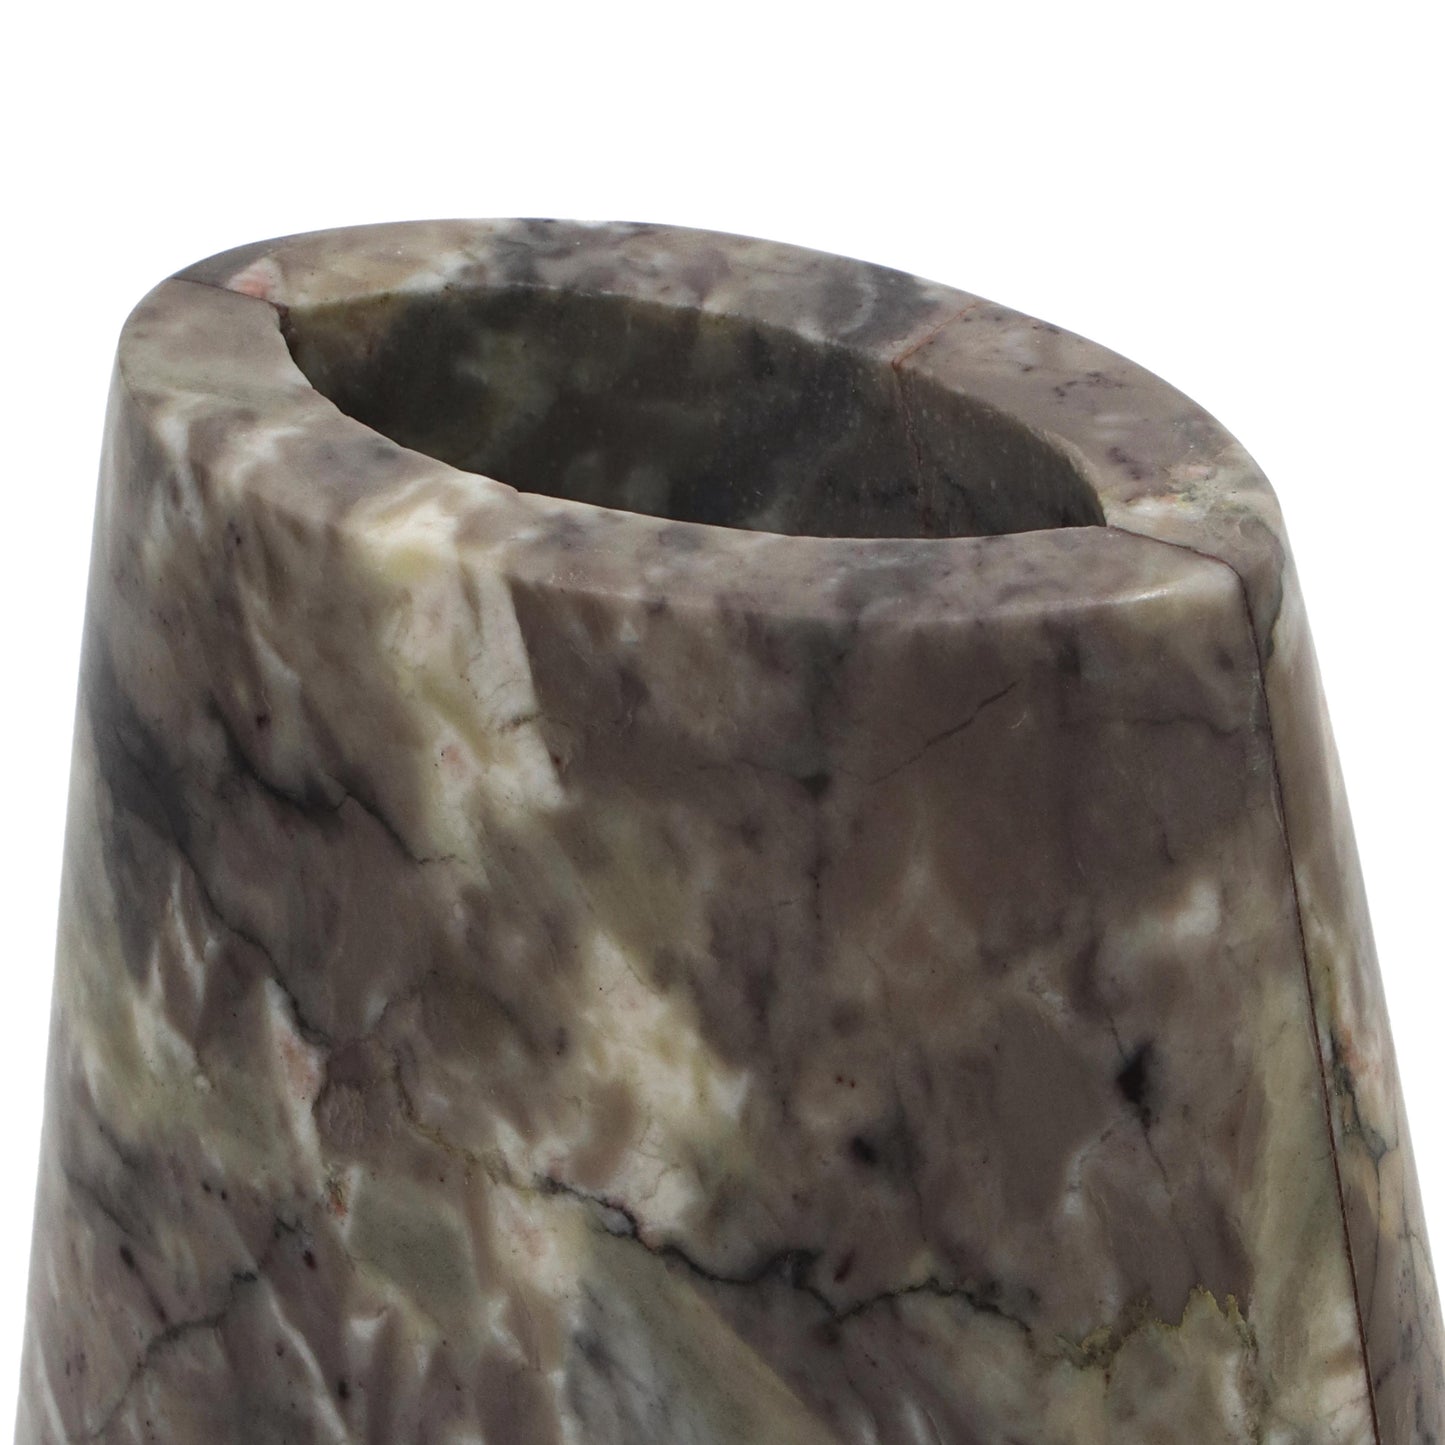 positano grey marble vase - medium